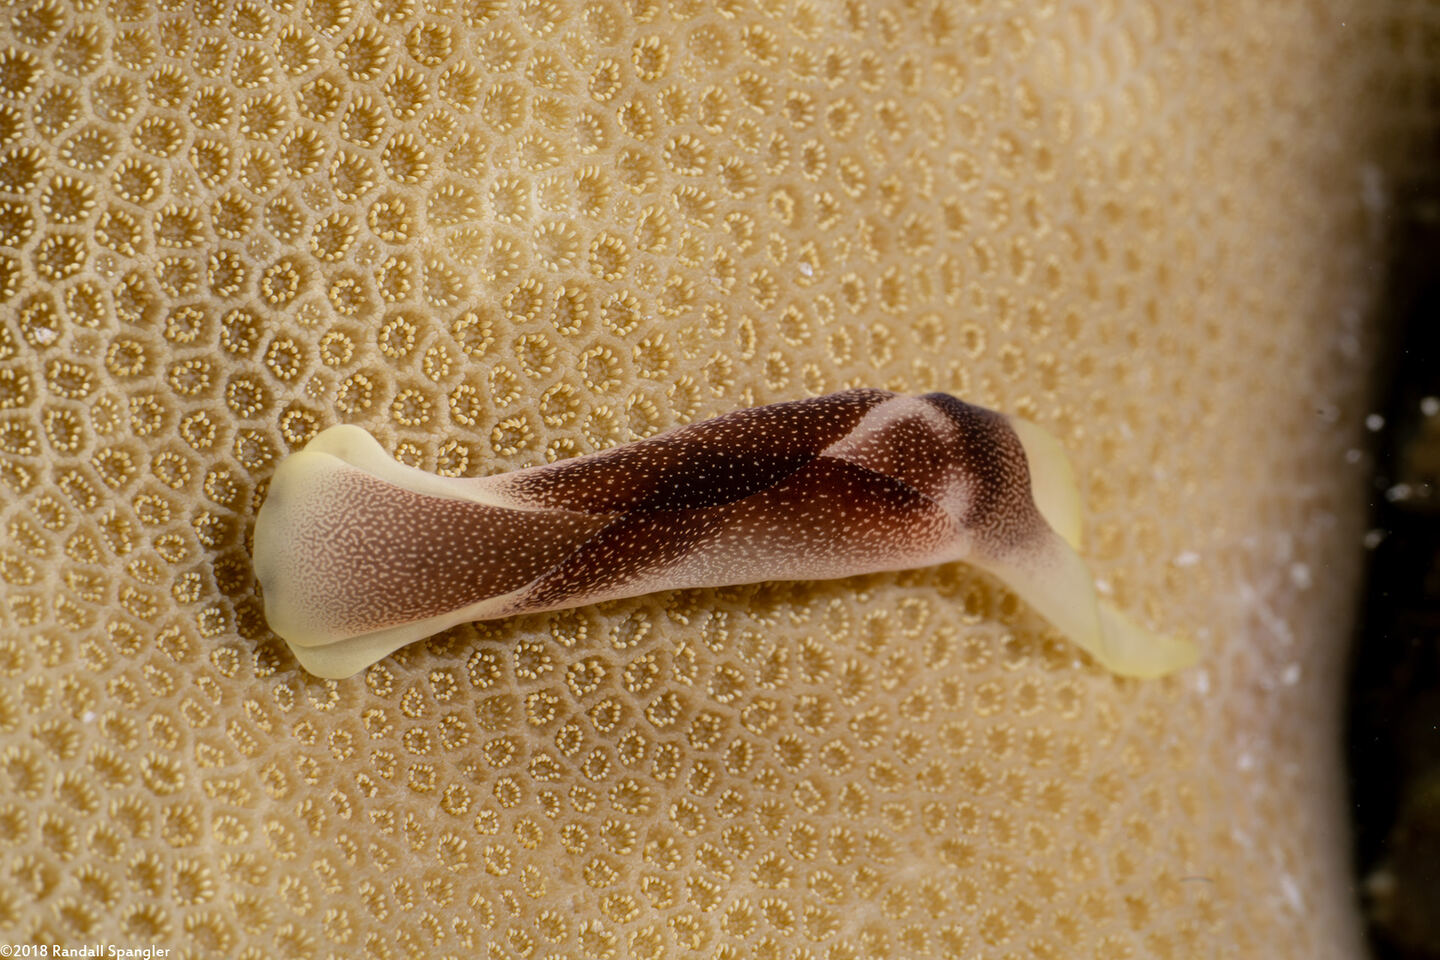 Chelidonura amoena (Lovely Headshield Slug)